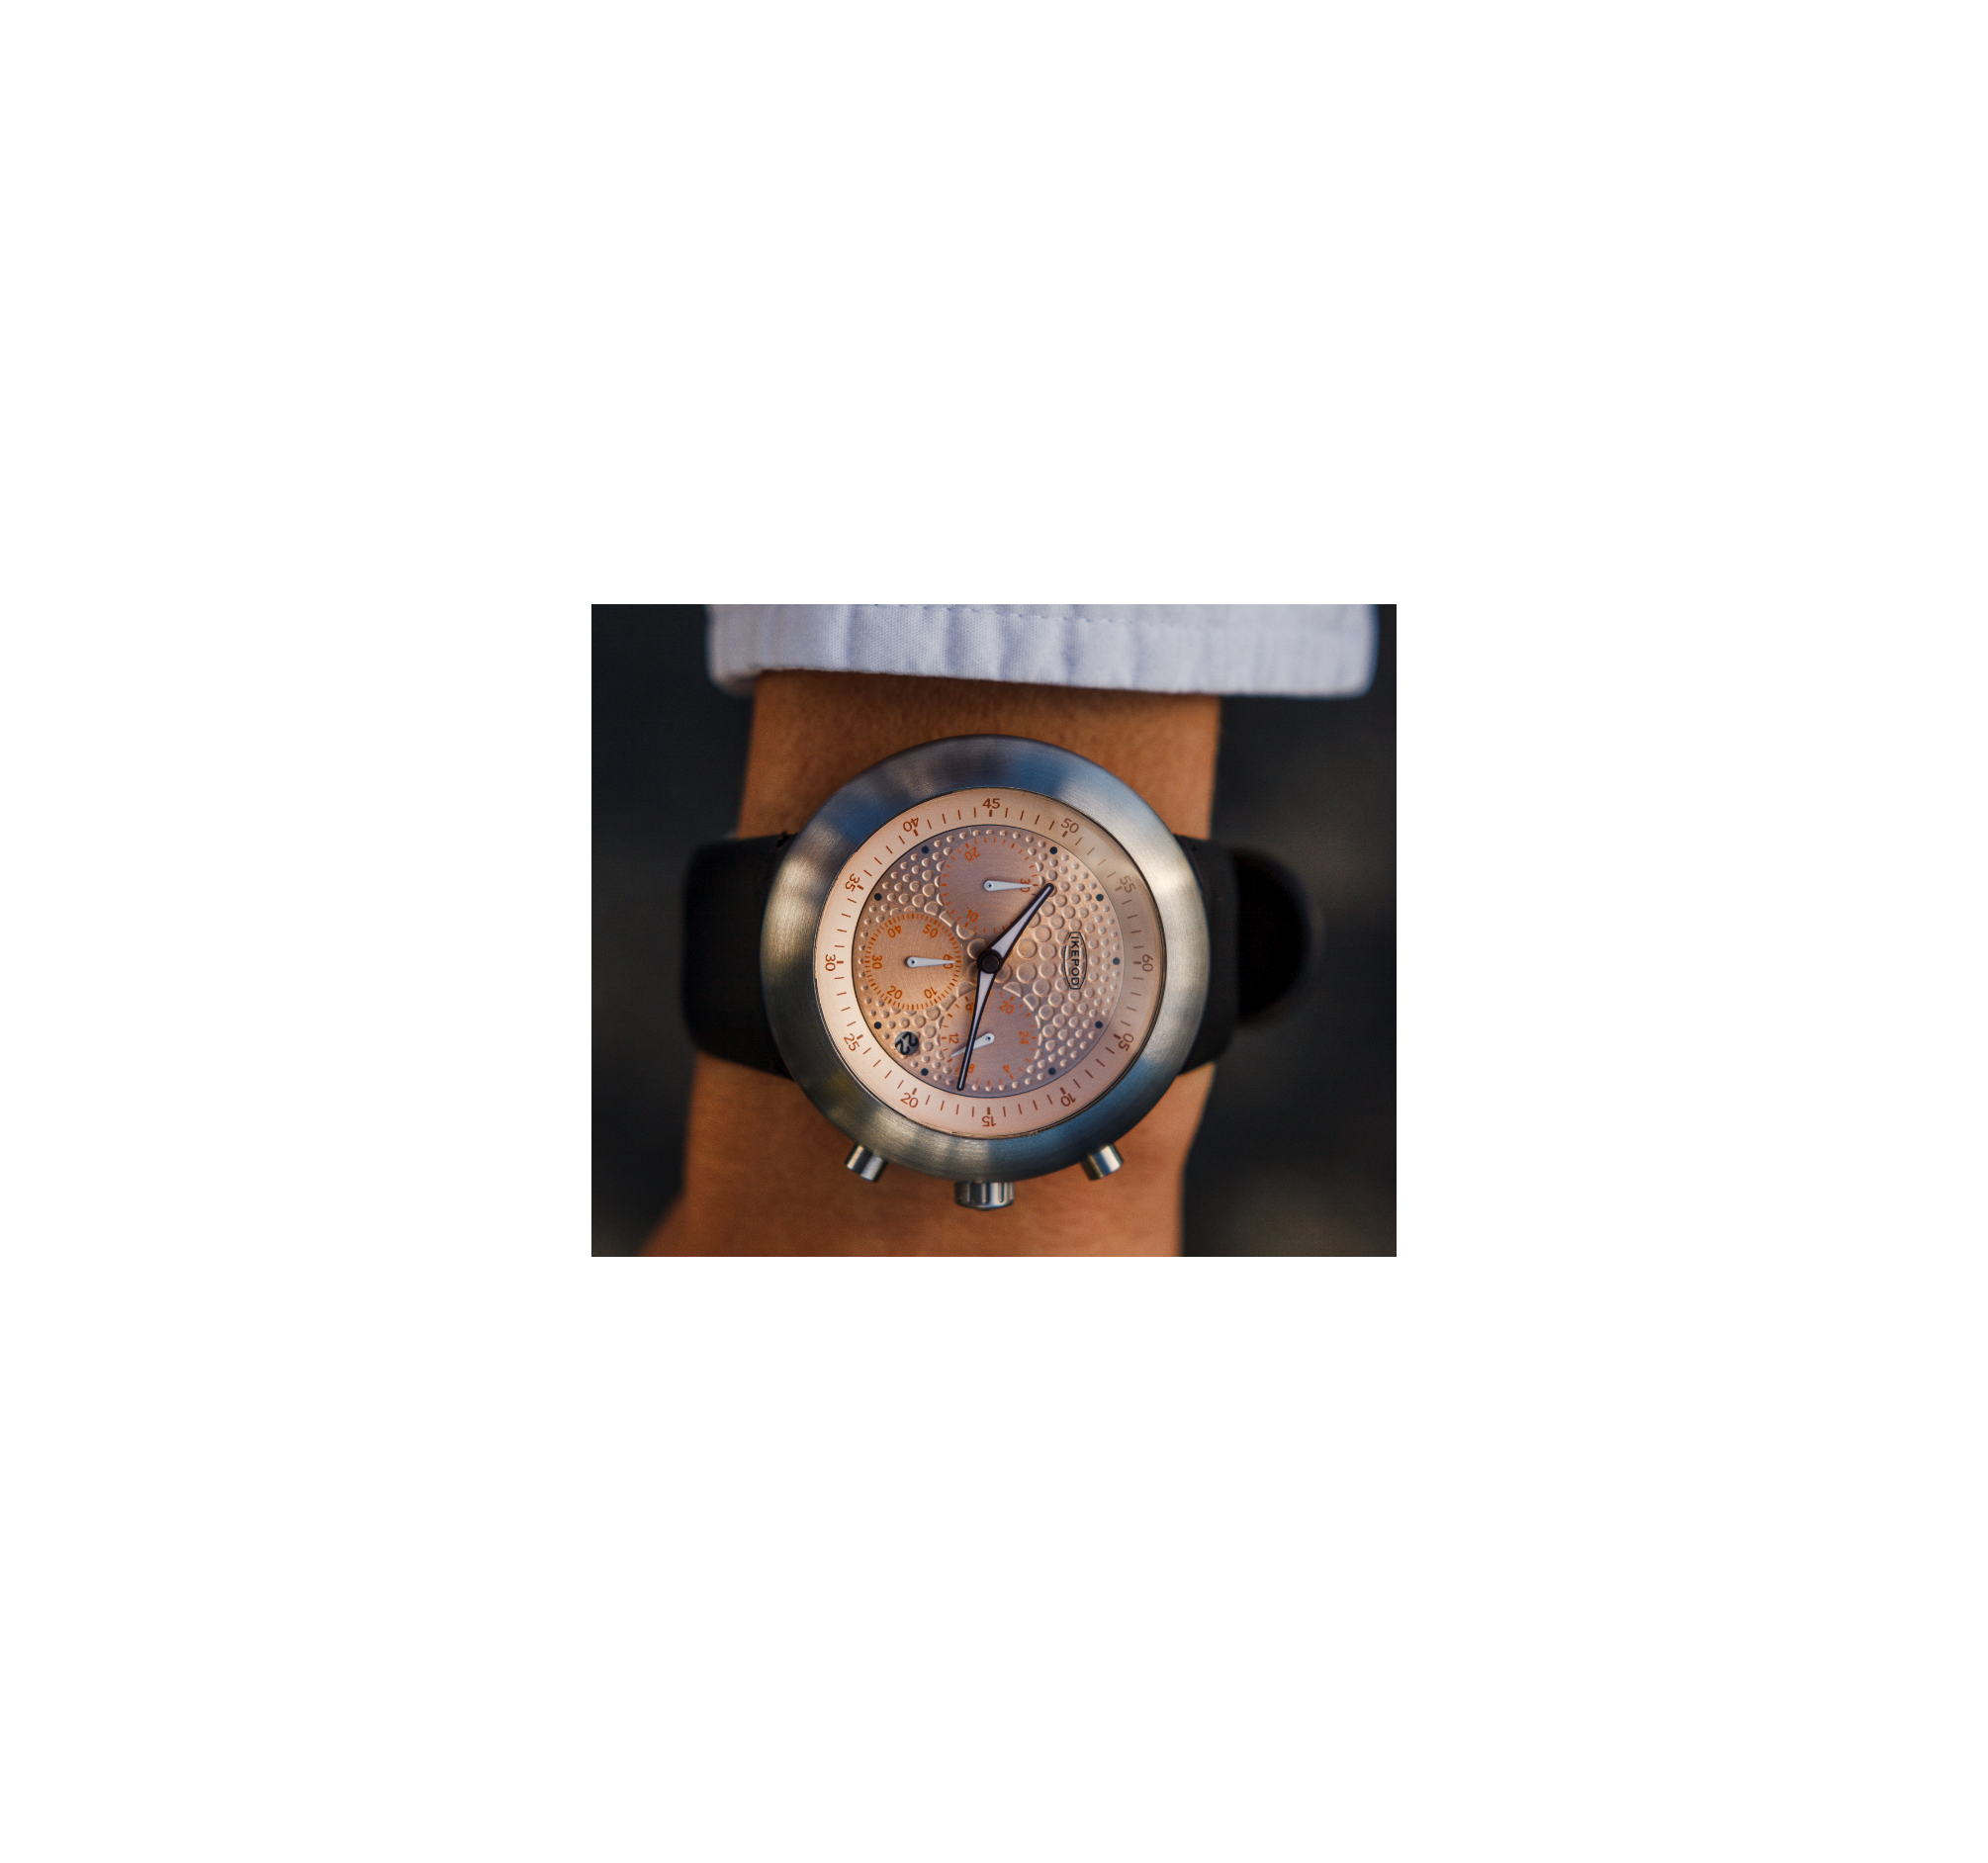 CHRONOPOD GOLD DOTS by IKEPOD. Quartz design chronograph